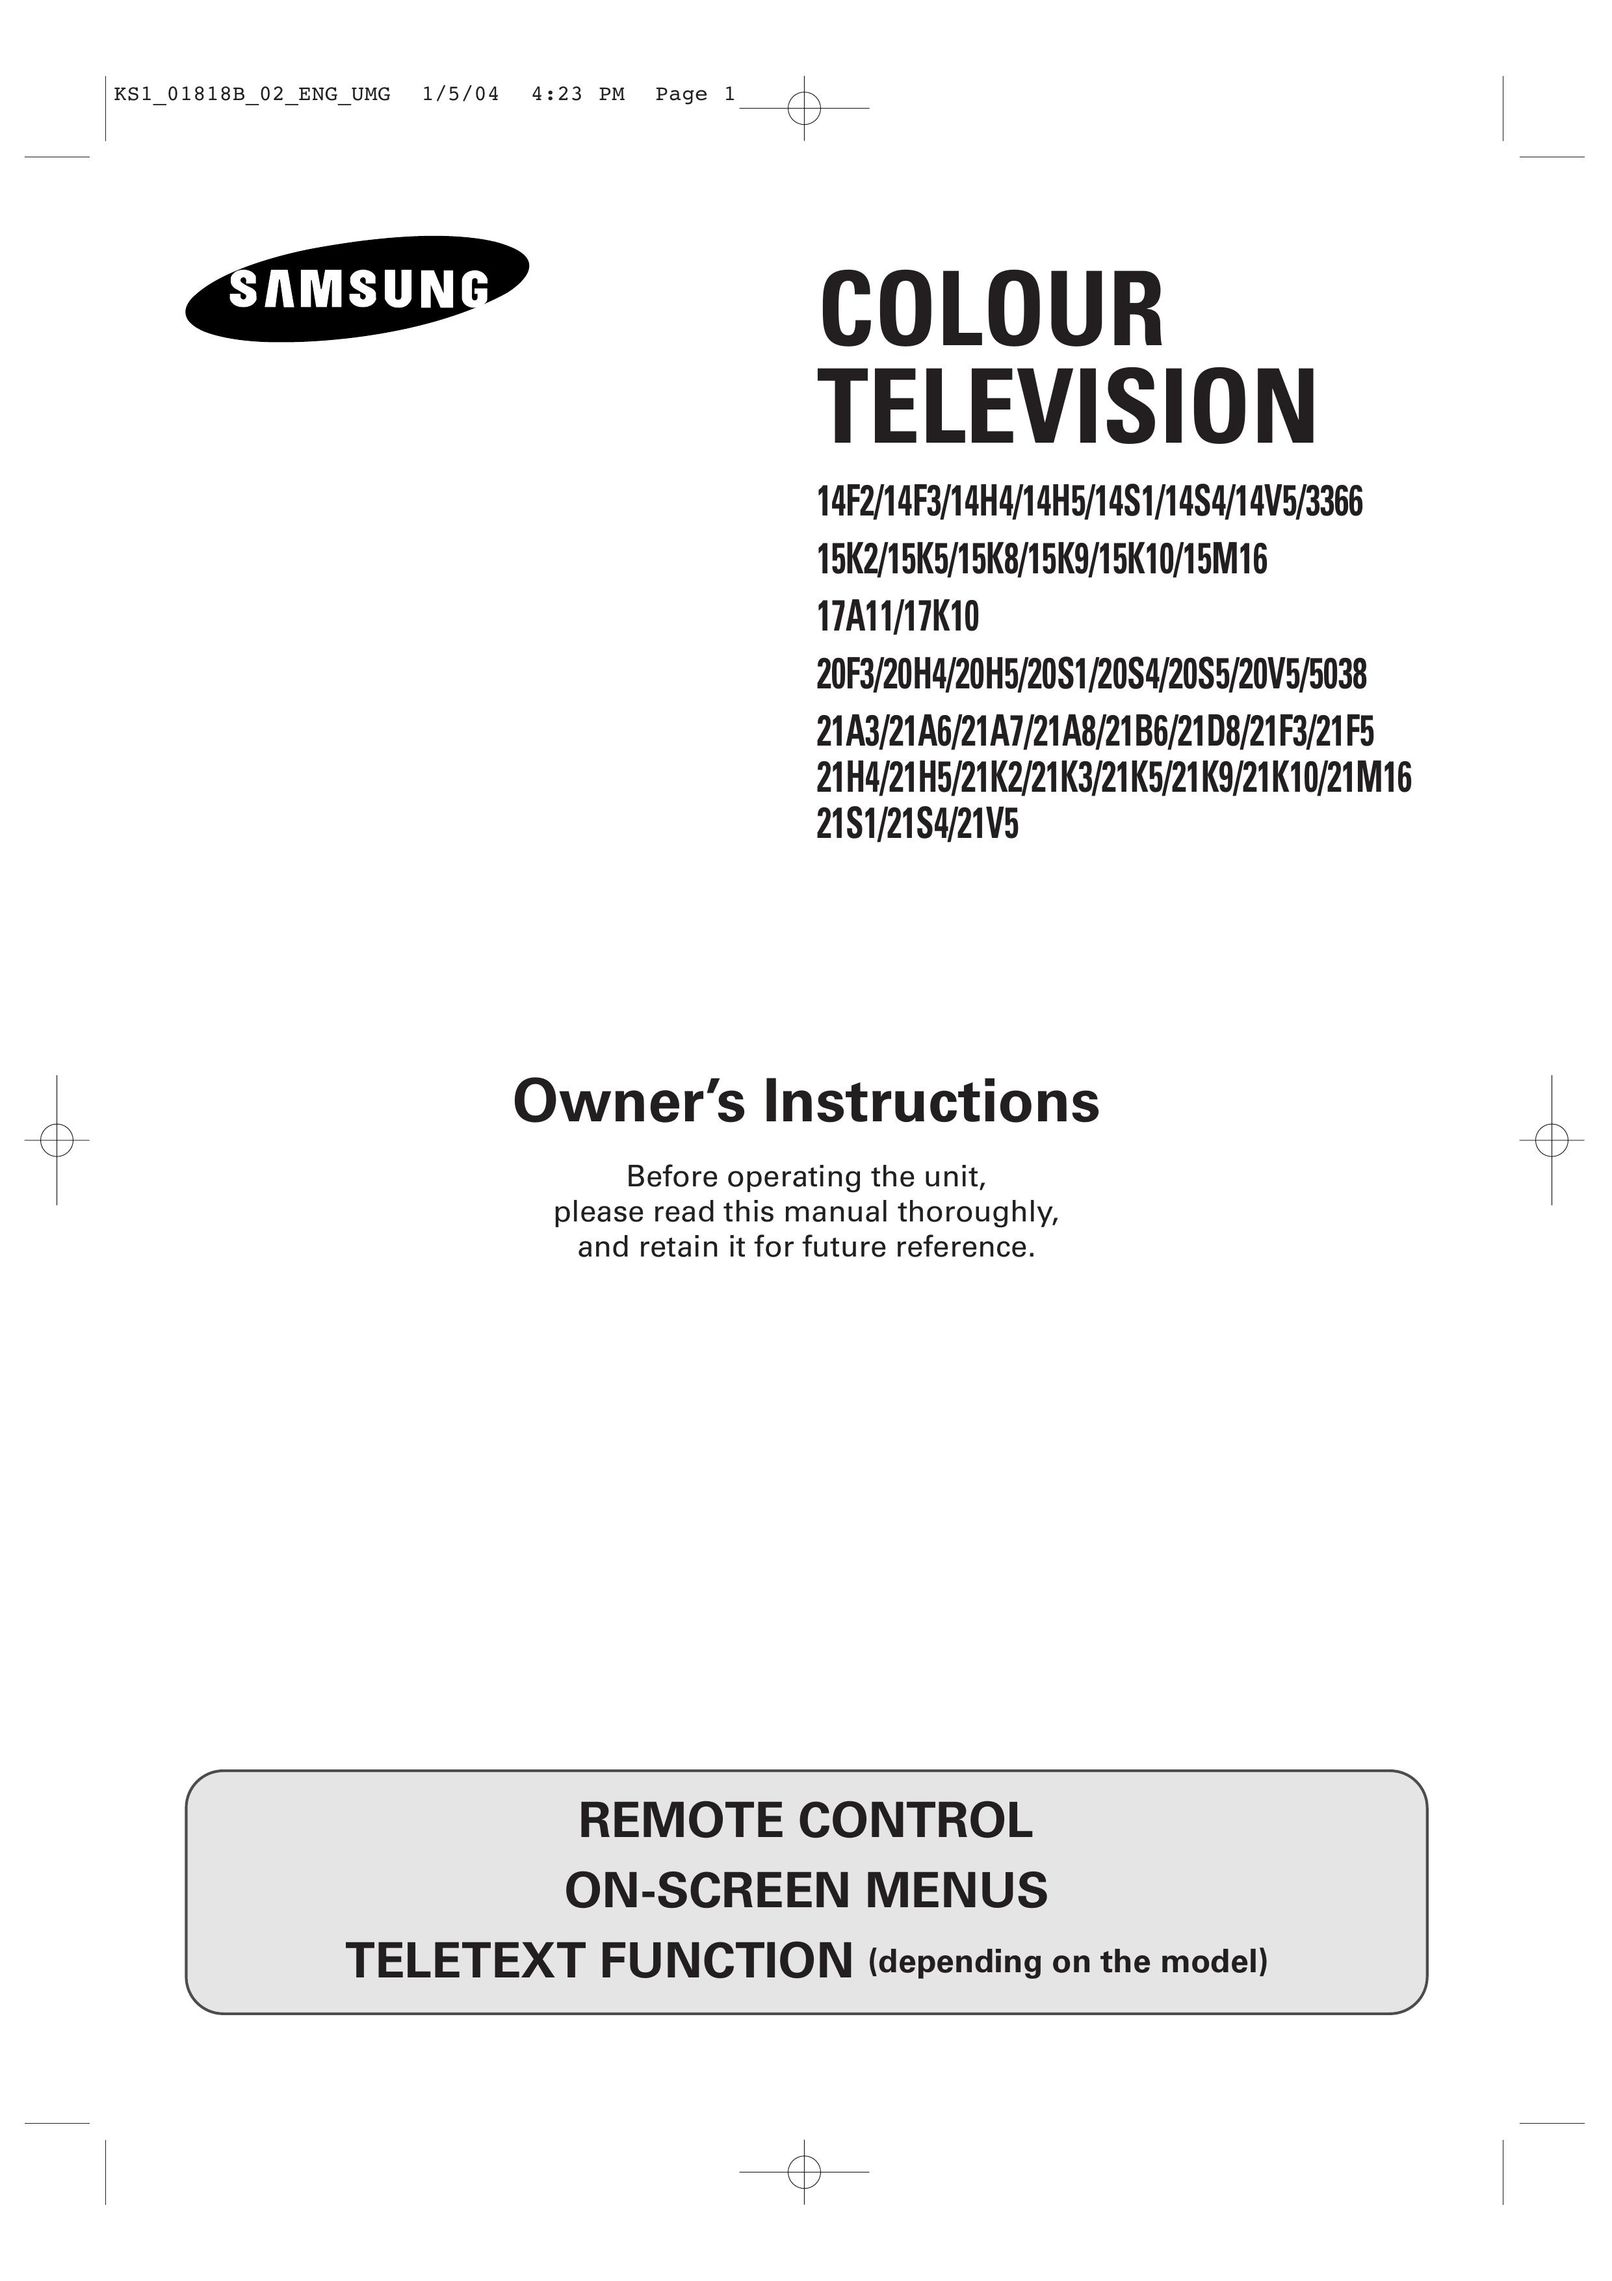 Samsung 17A11 CRT Television User Manual